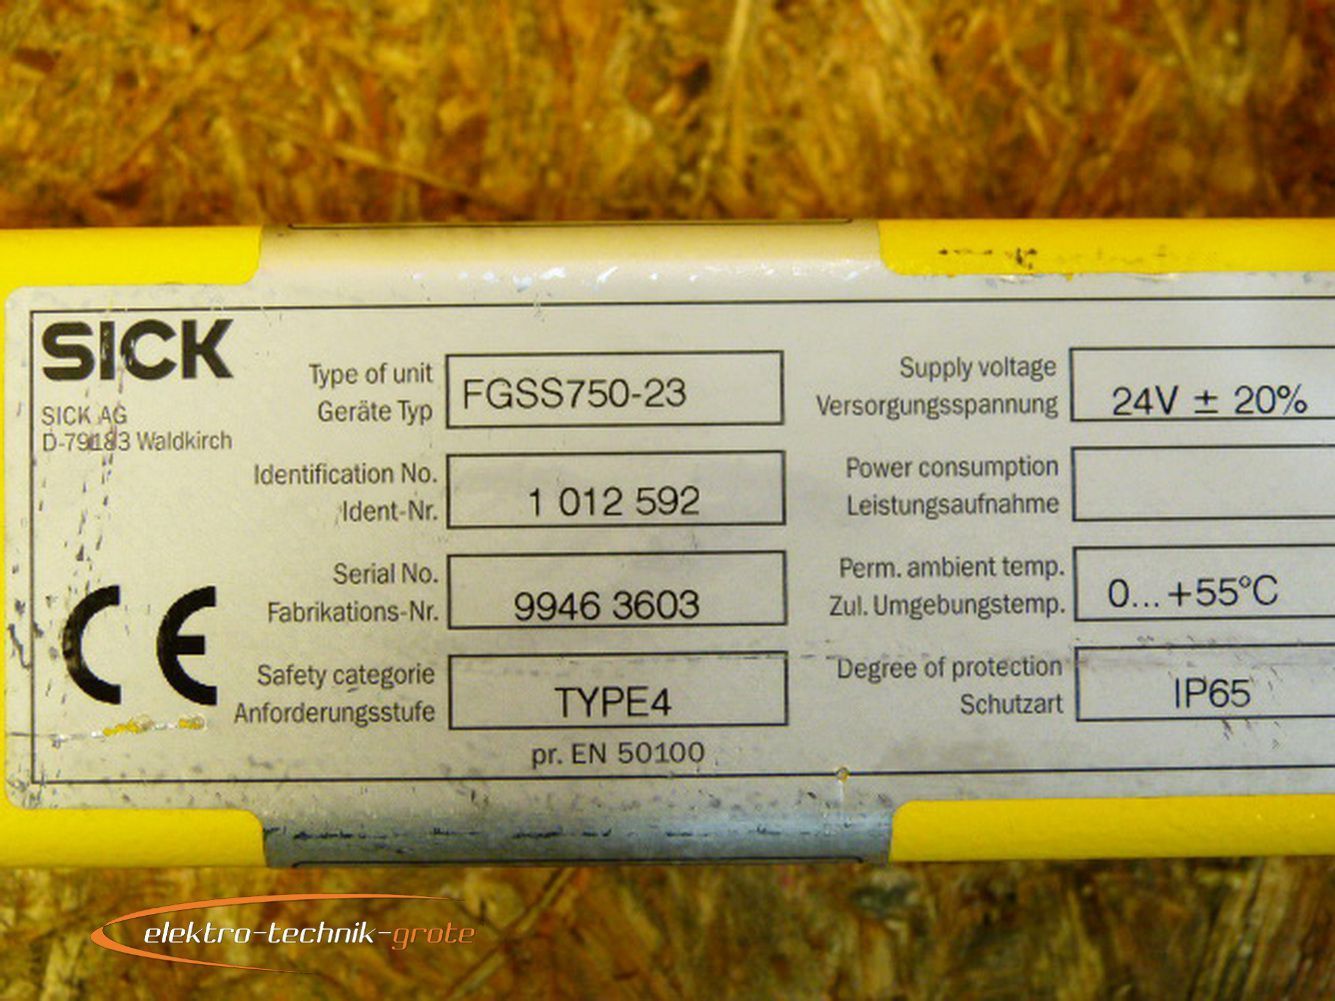 Sick FGSS750-23 Lichtgitter Sender FGSS750-23,施克,PLC